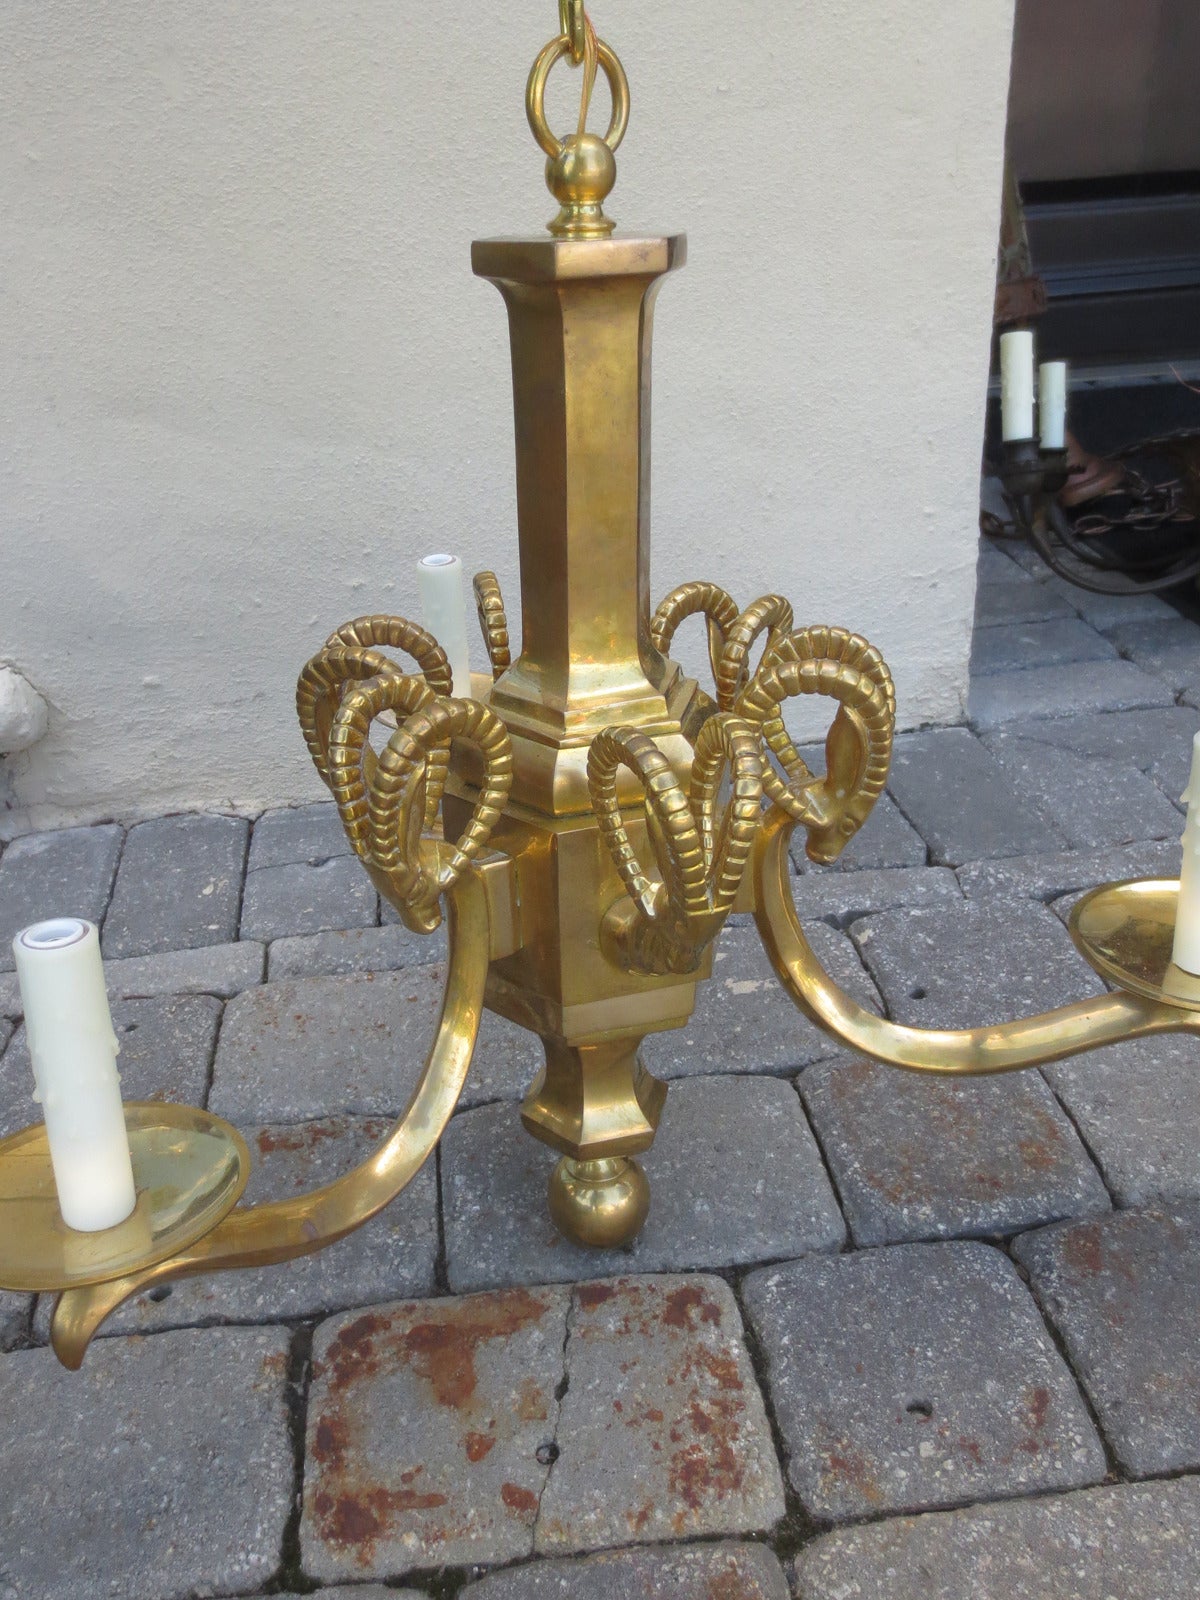 Mid-20th century Champan brass three-arm chandelier with Ram's Heads, solid brass
New wiring.